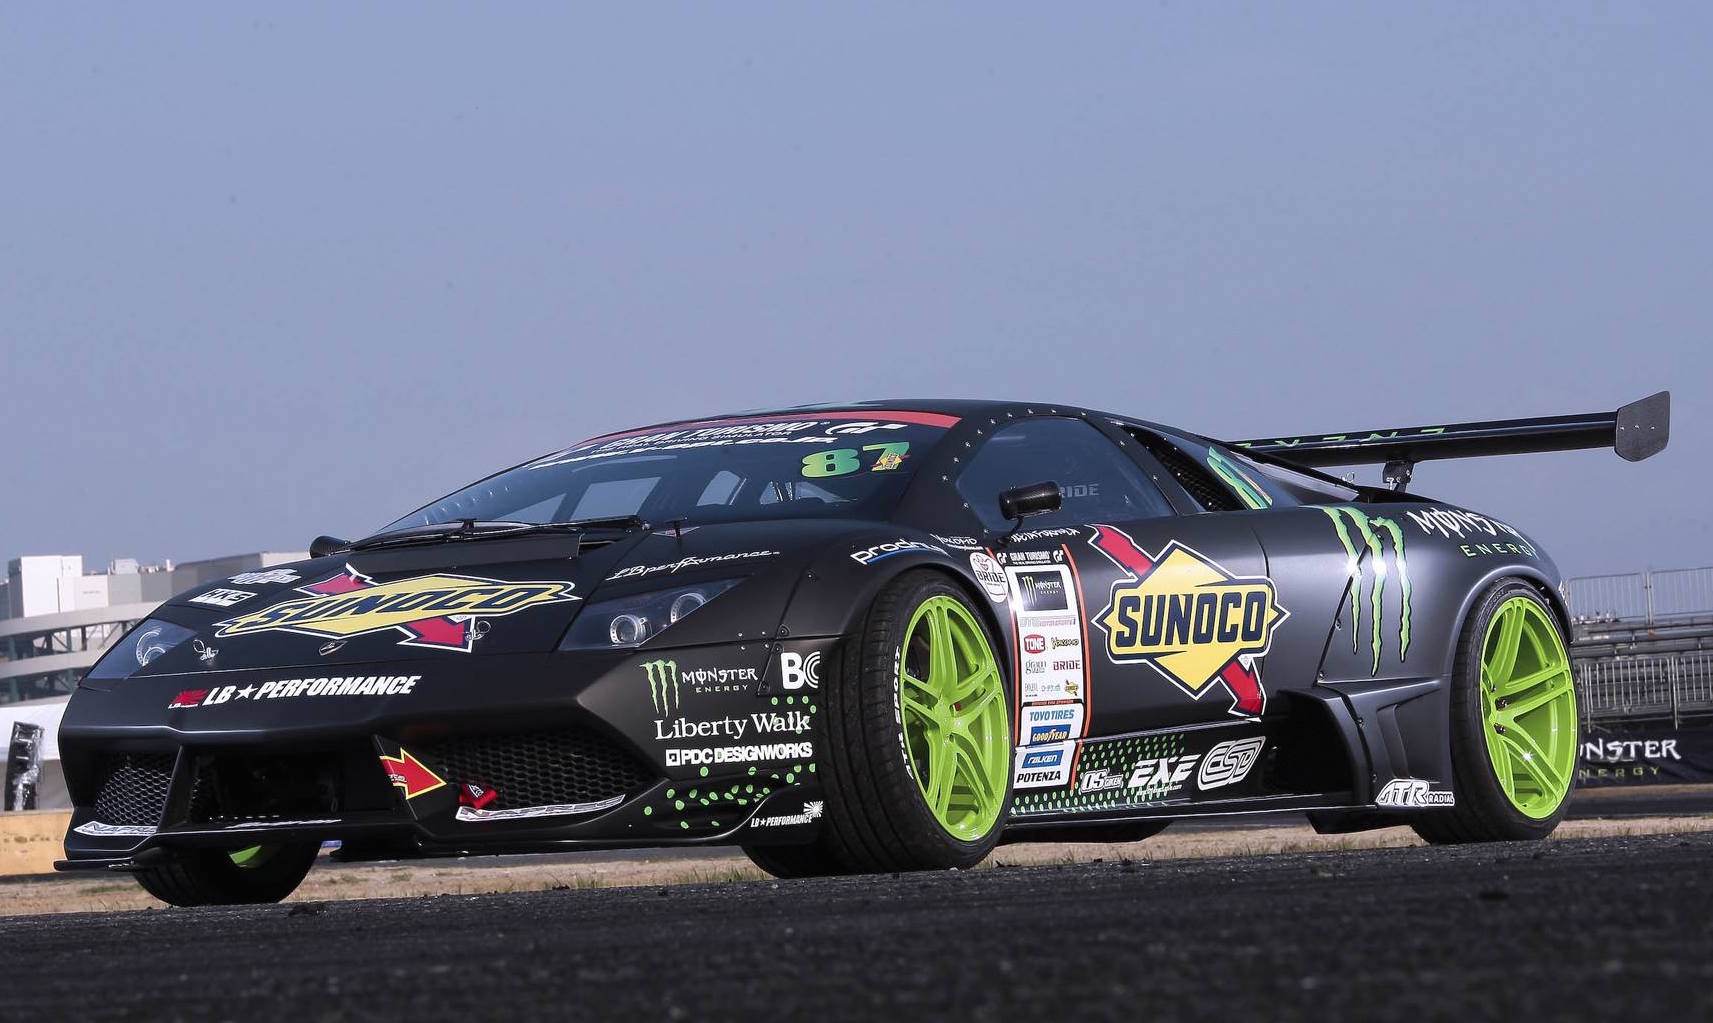 Lamborghini Murcielago drift car begins testing, uses RWD conversion